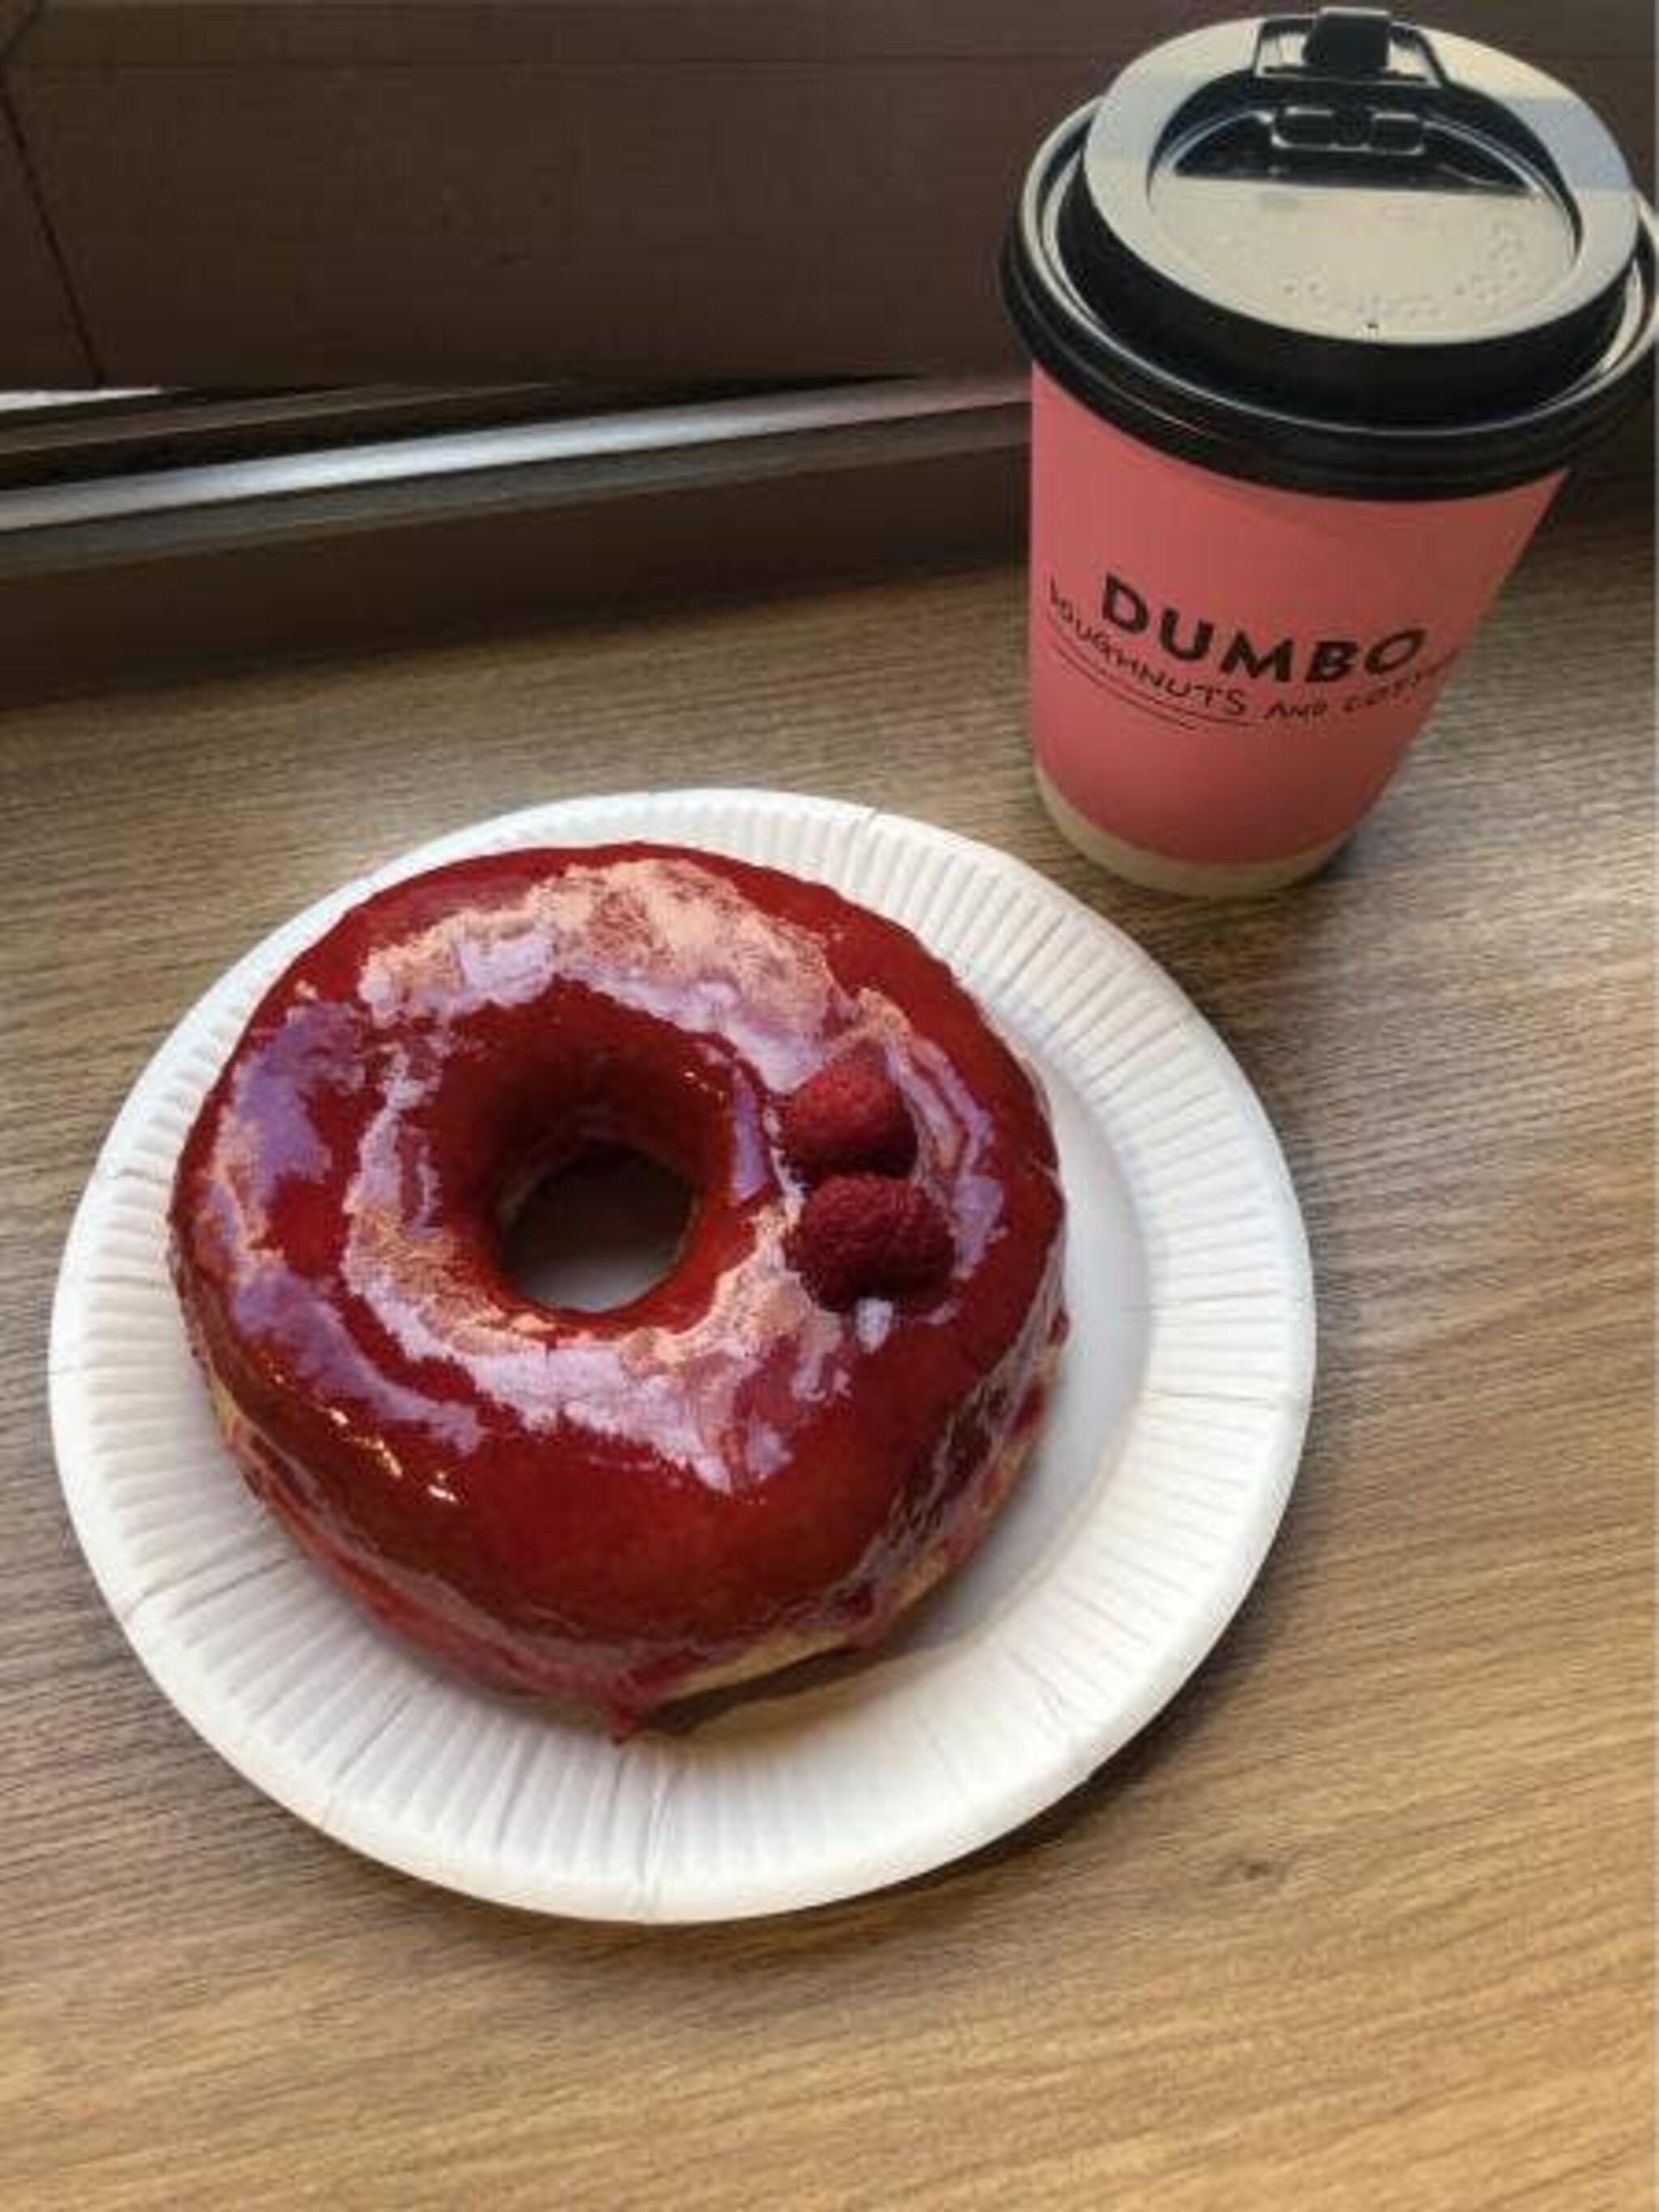 DUMBO Doughnuts and Coffeeの代表写真10